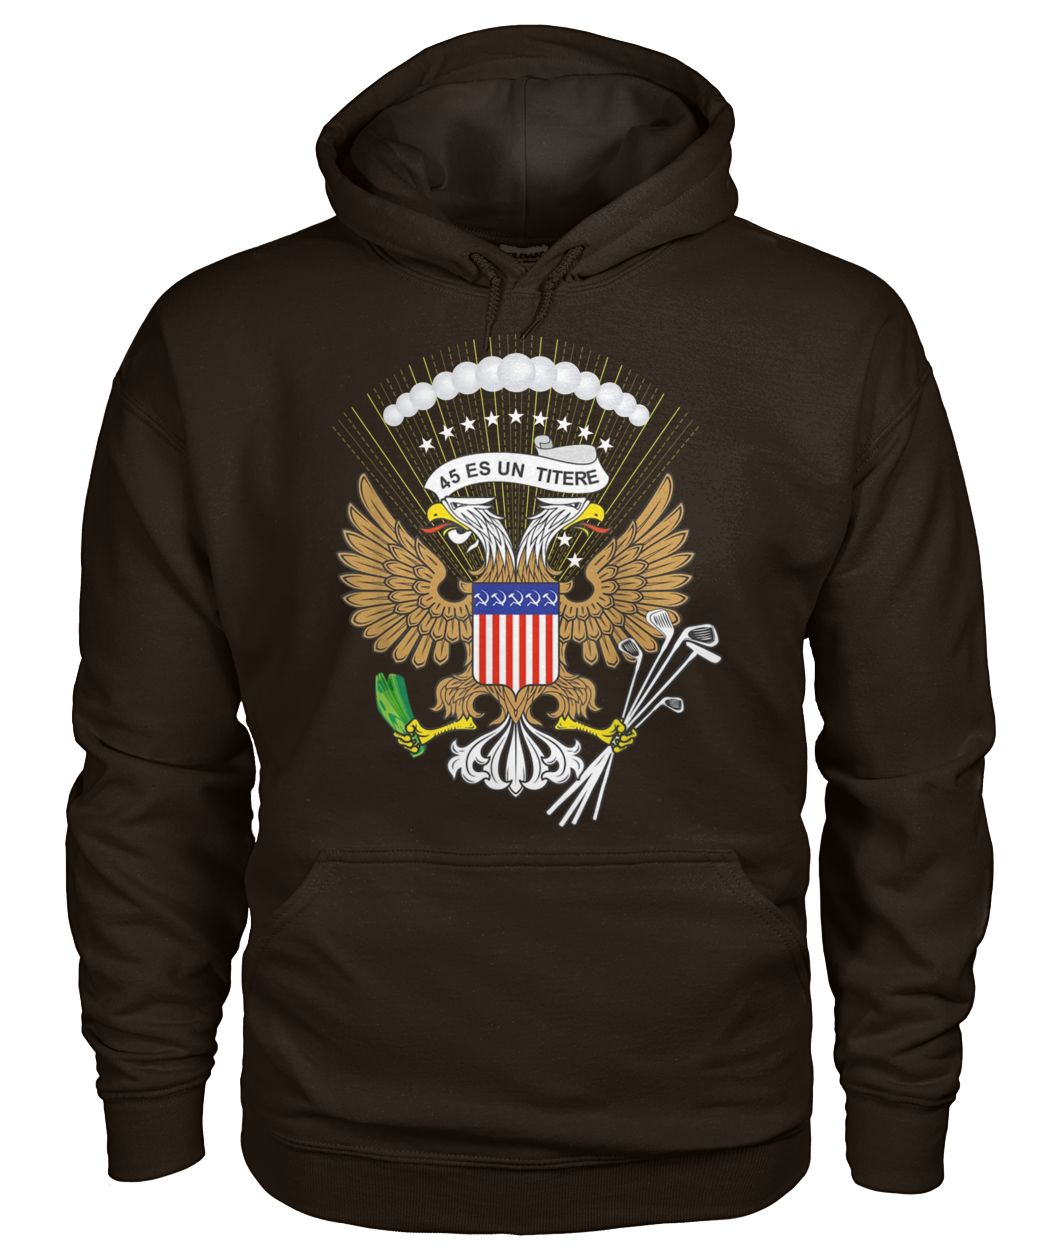 Trump fake russian presidential seal 45 is a puppet political gildan hoodie